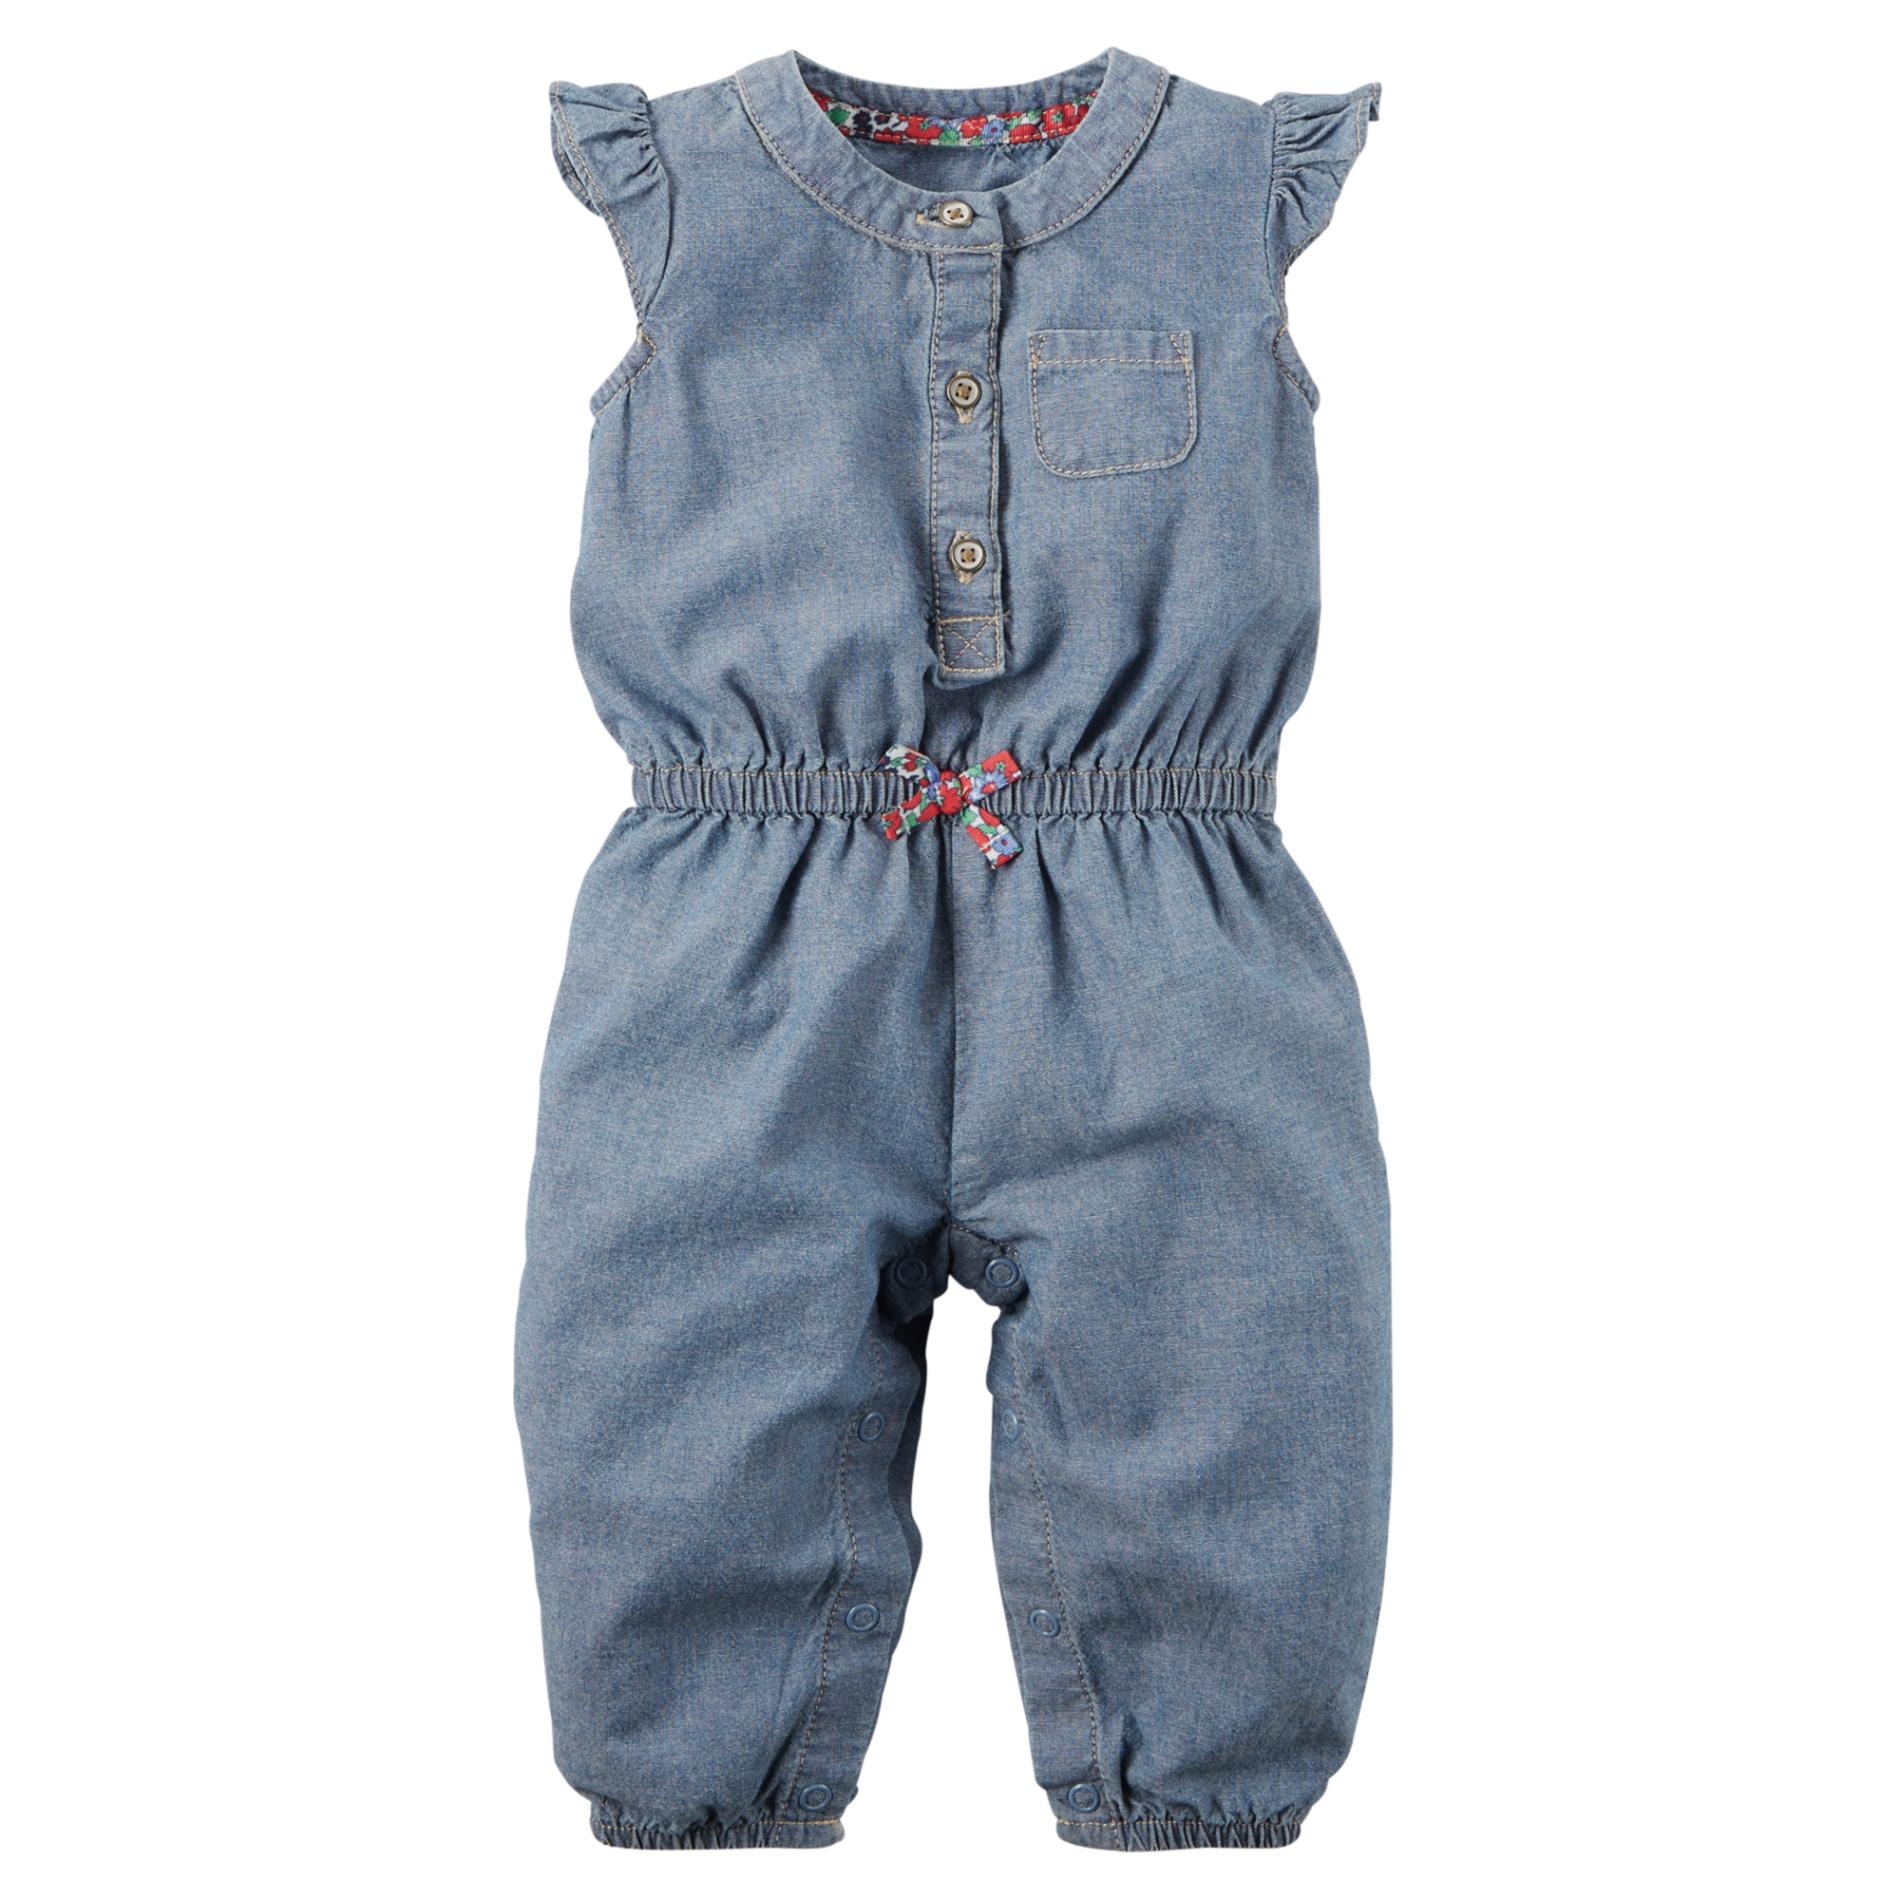 Carter's Infant & Toddler Girl's Chambray Jumpsuit